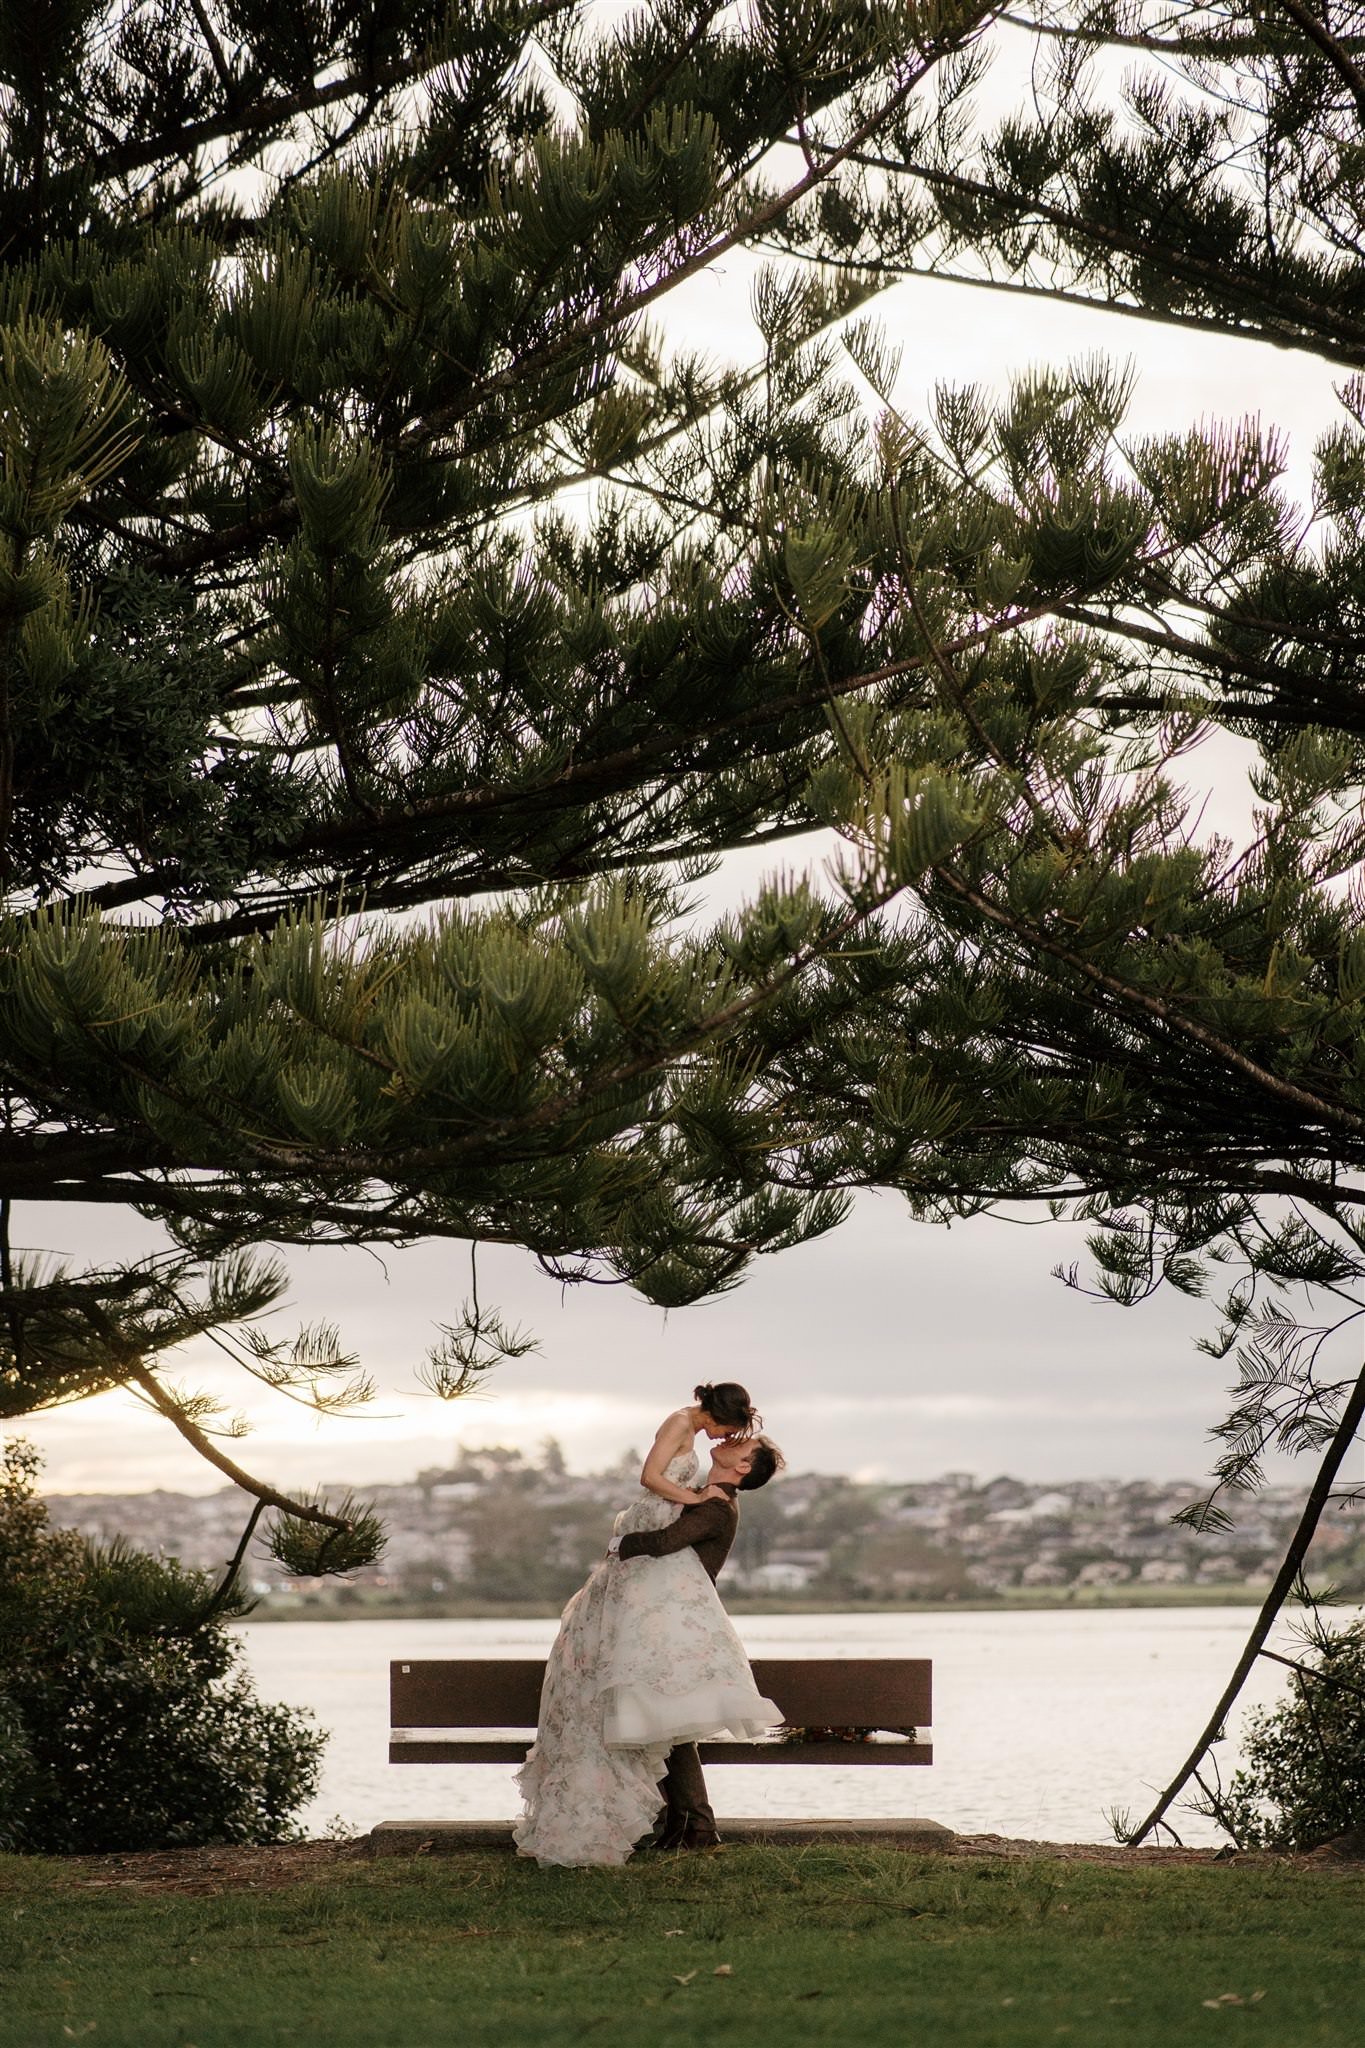 home-backyard-wedding-diy-best-kiwi-traditional-korean-hanbok-wedding-gown-Choson-ot-auckland-wedding-photographer-videography-dear-white-productions (85).jpg